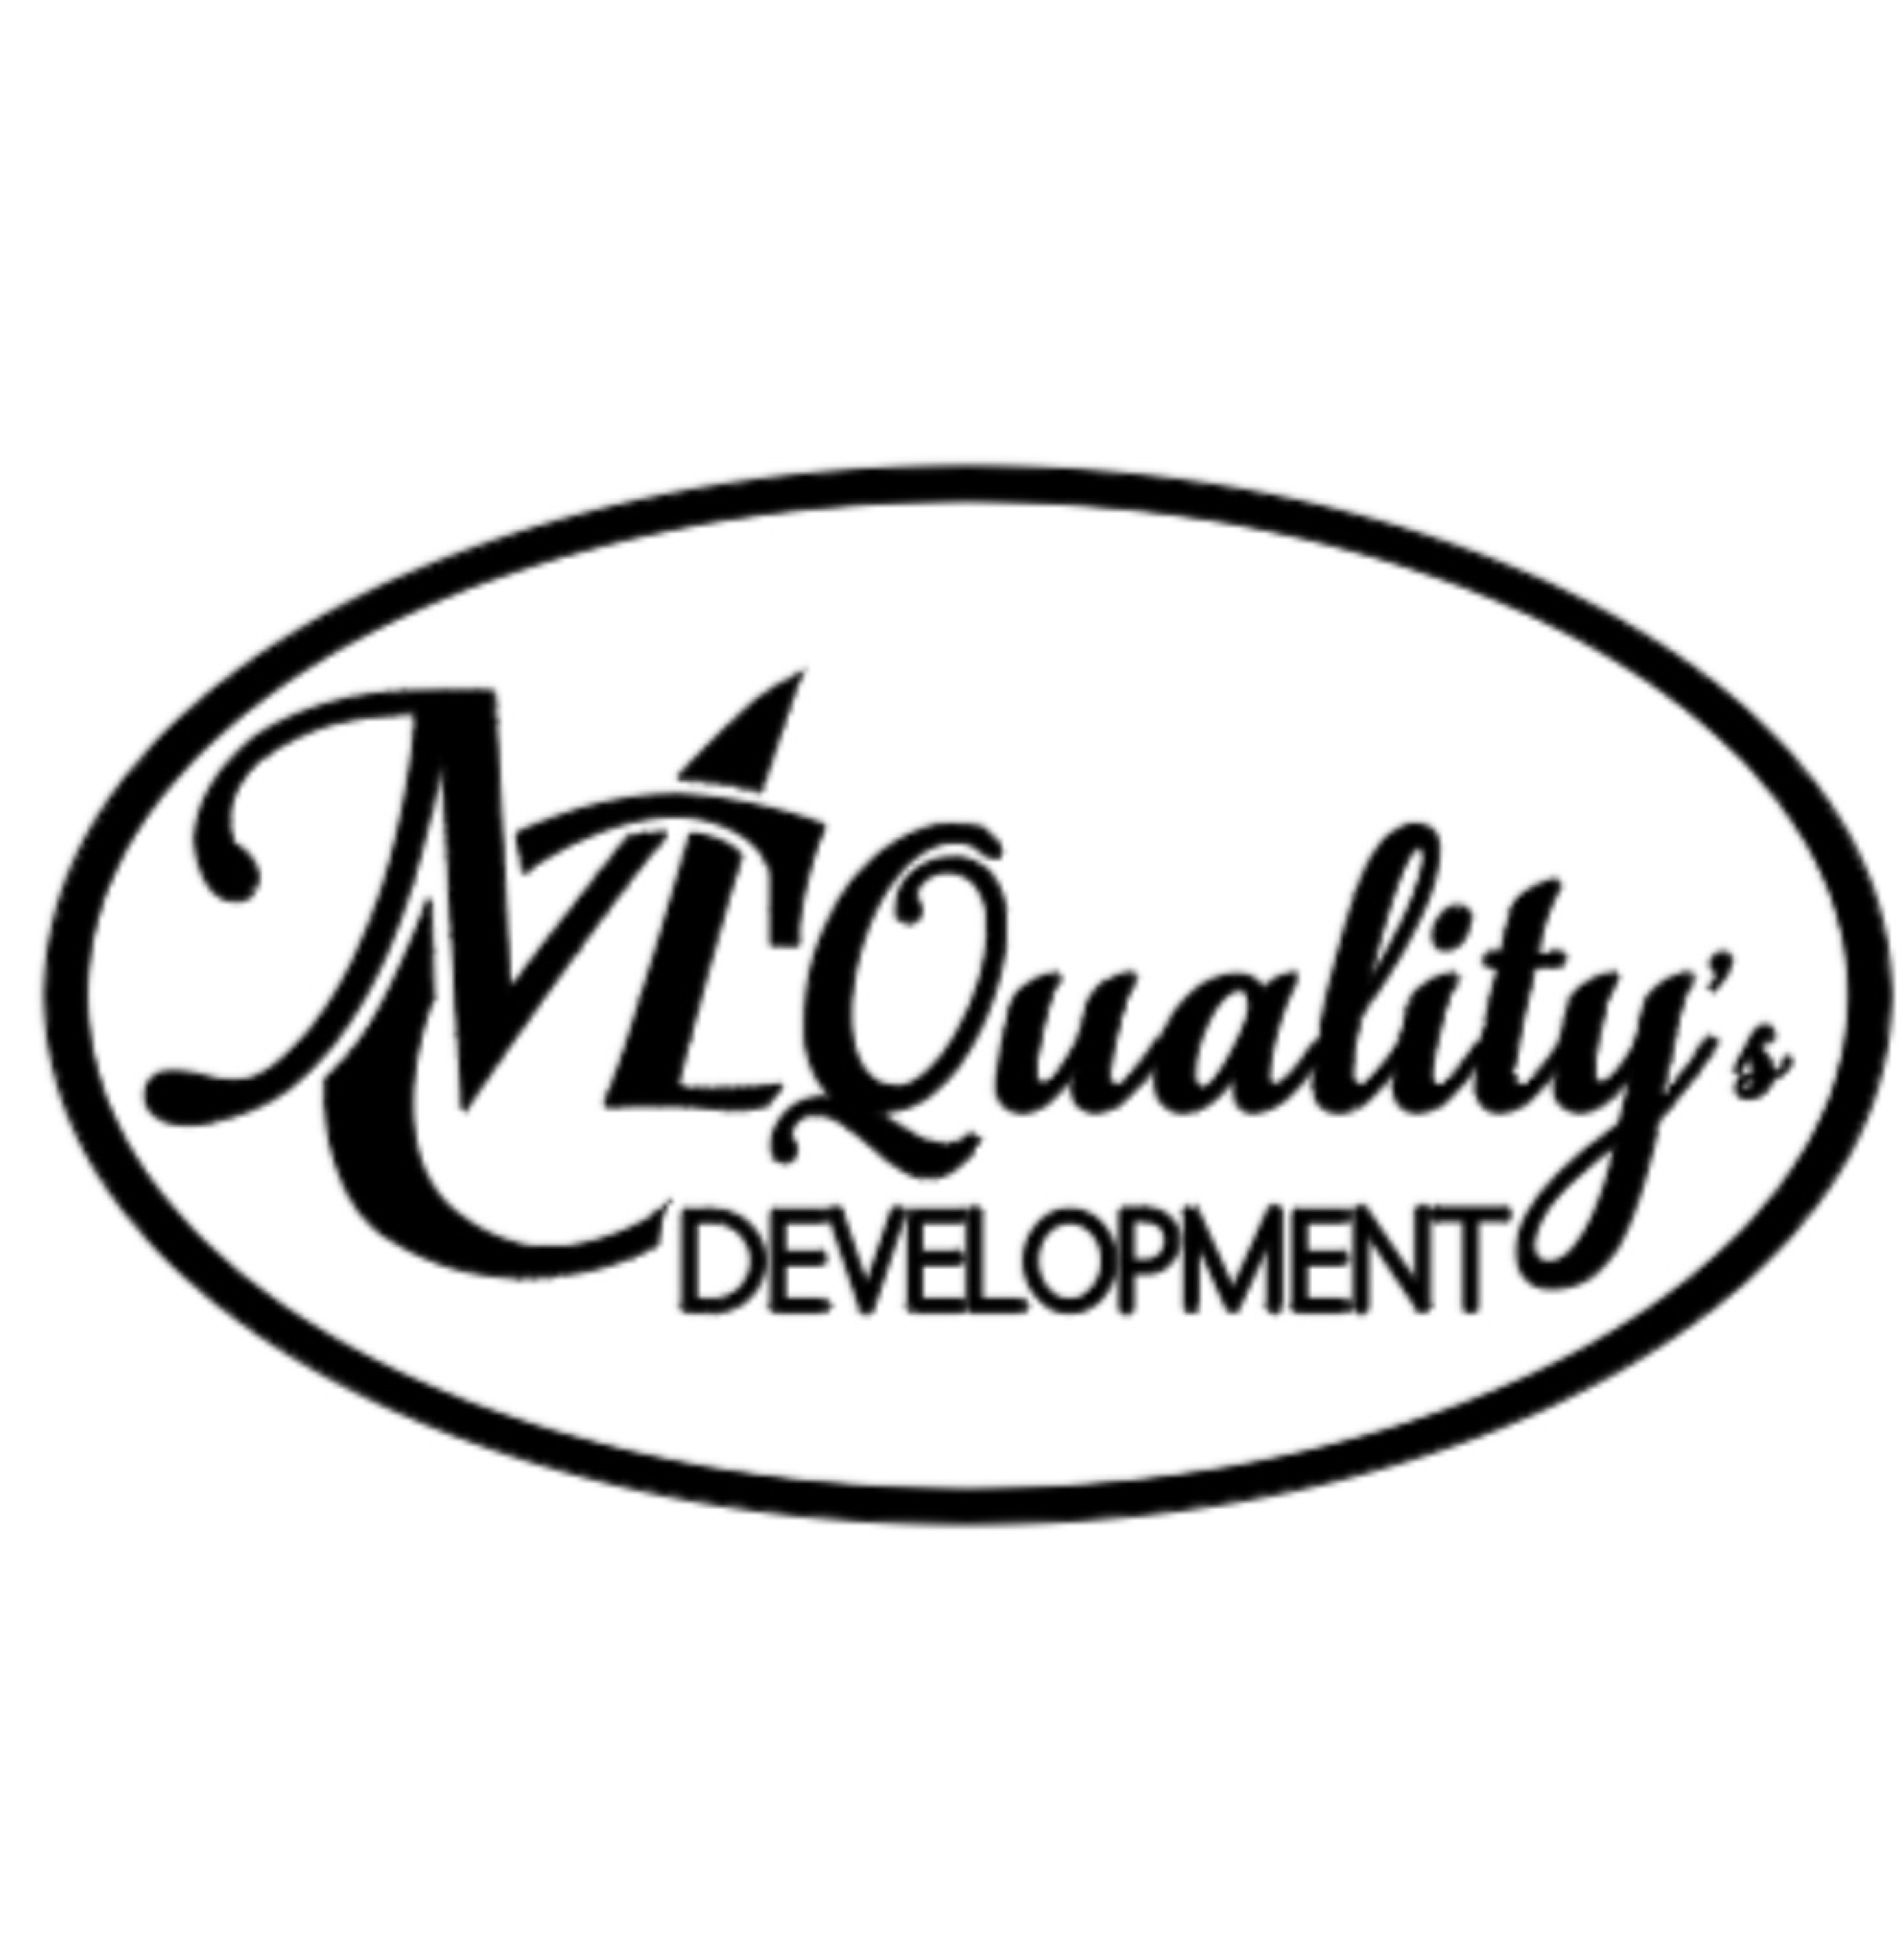 McQuality's Development, LLC Logo